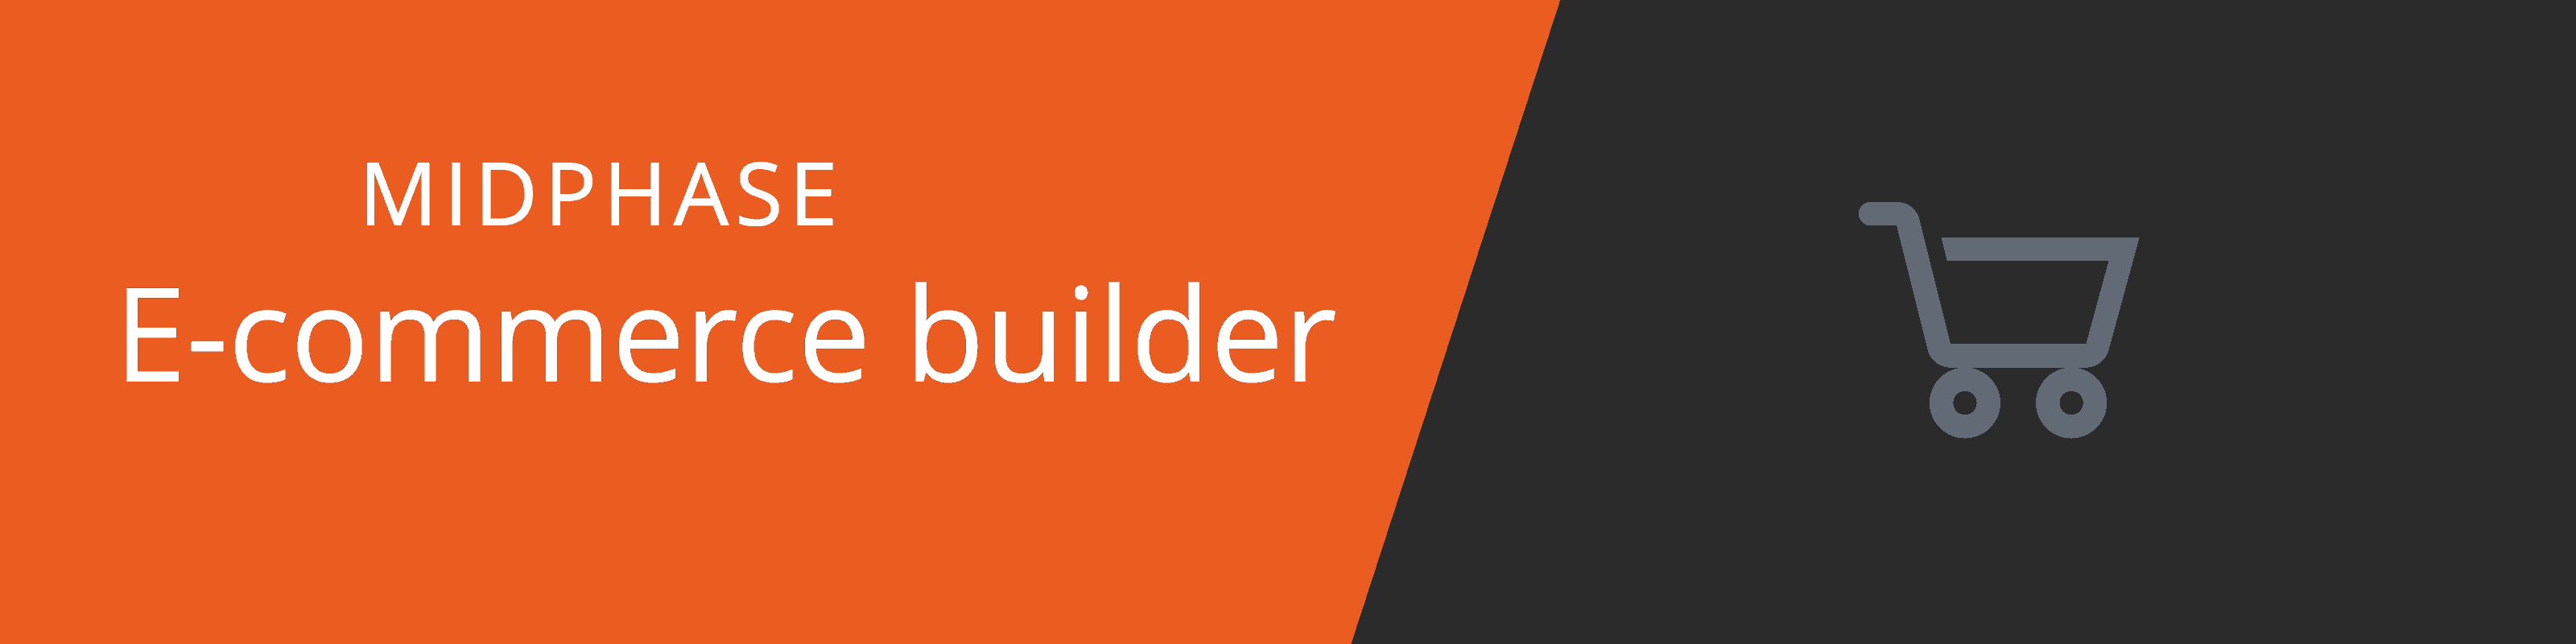 midphase-e-commerce-builder